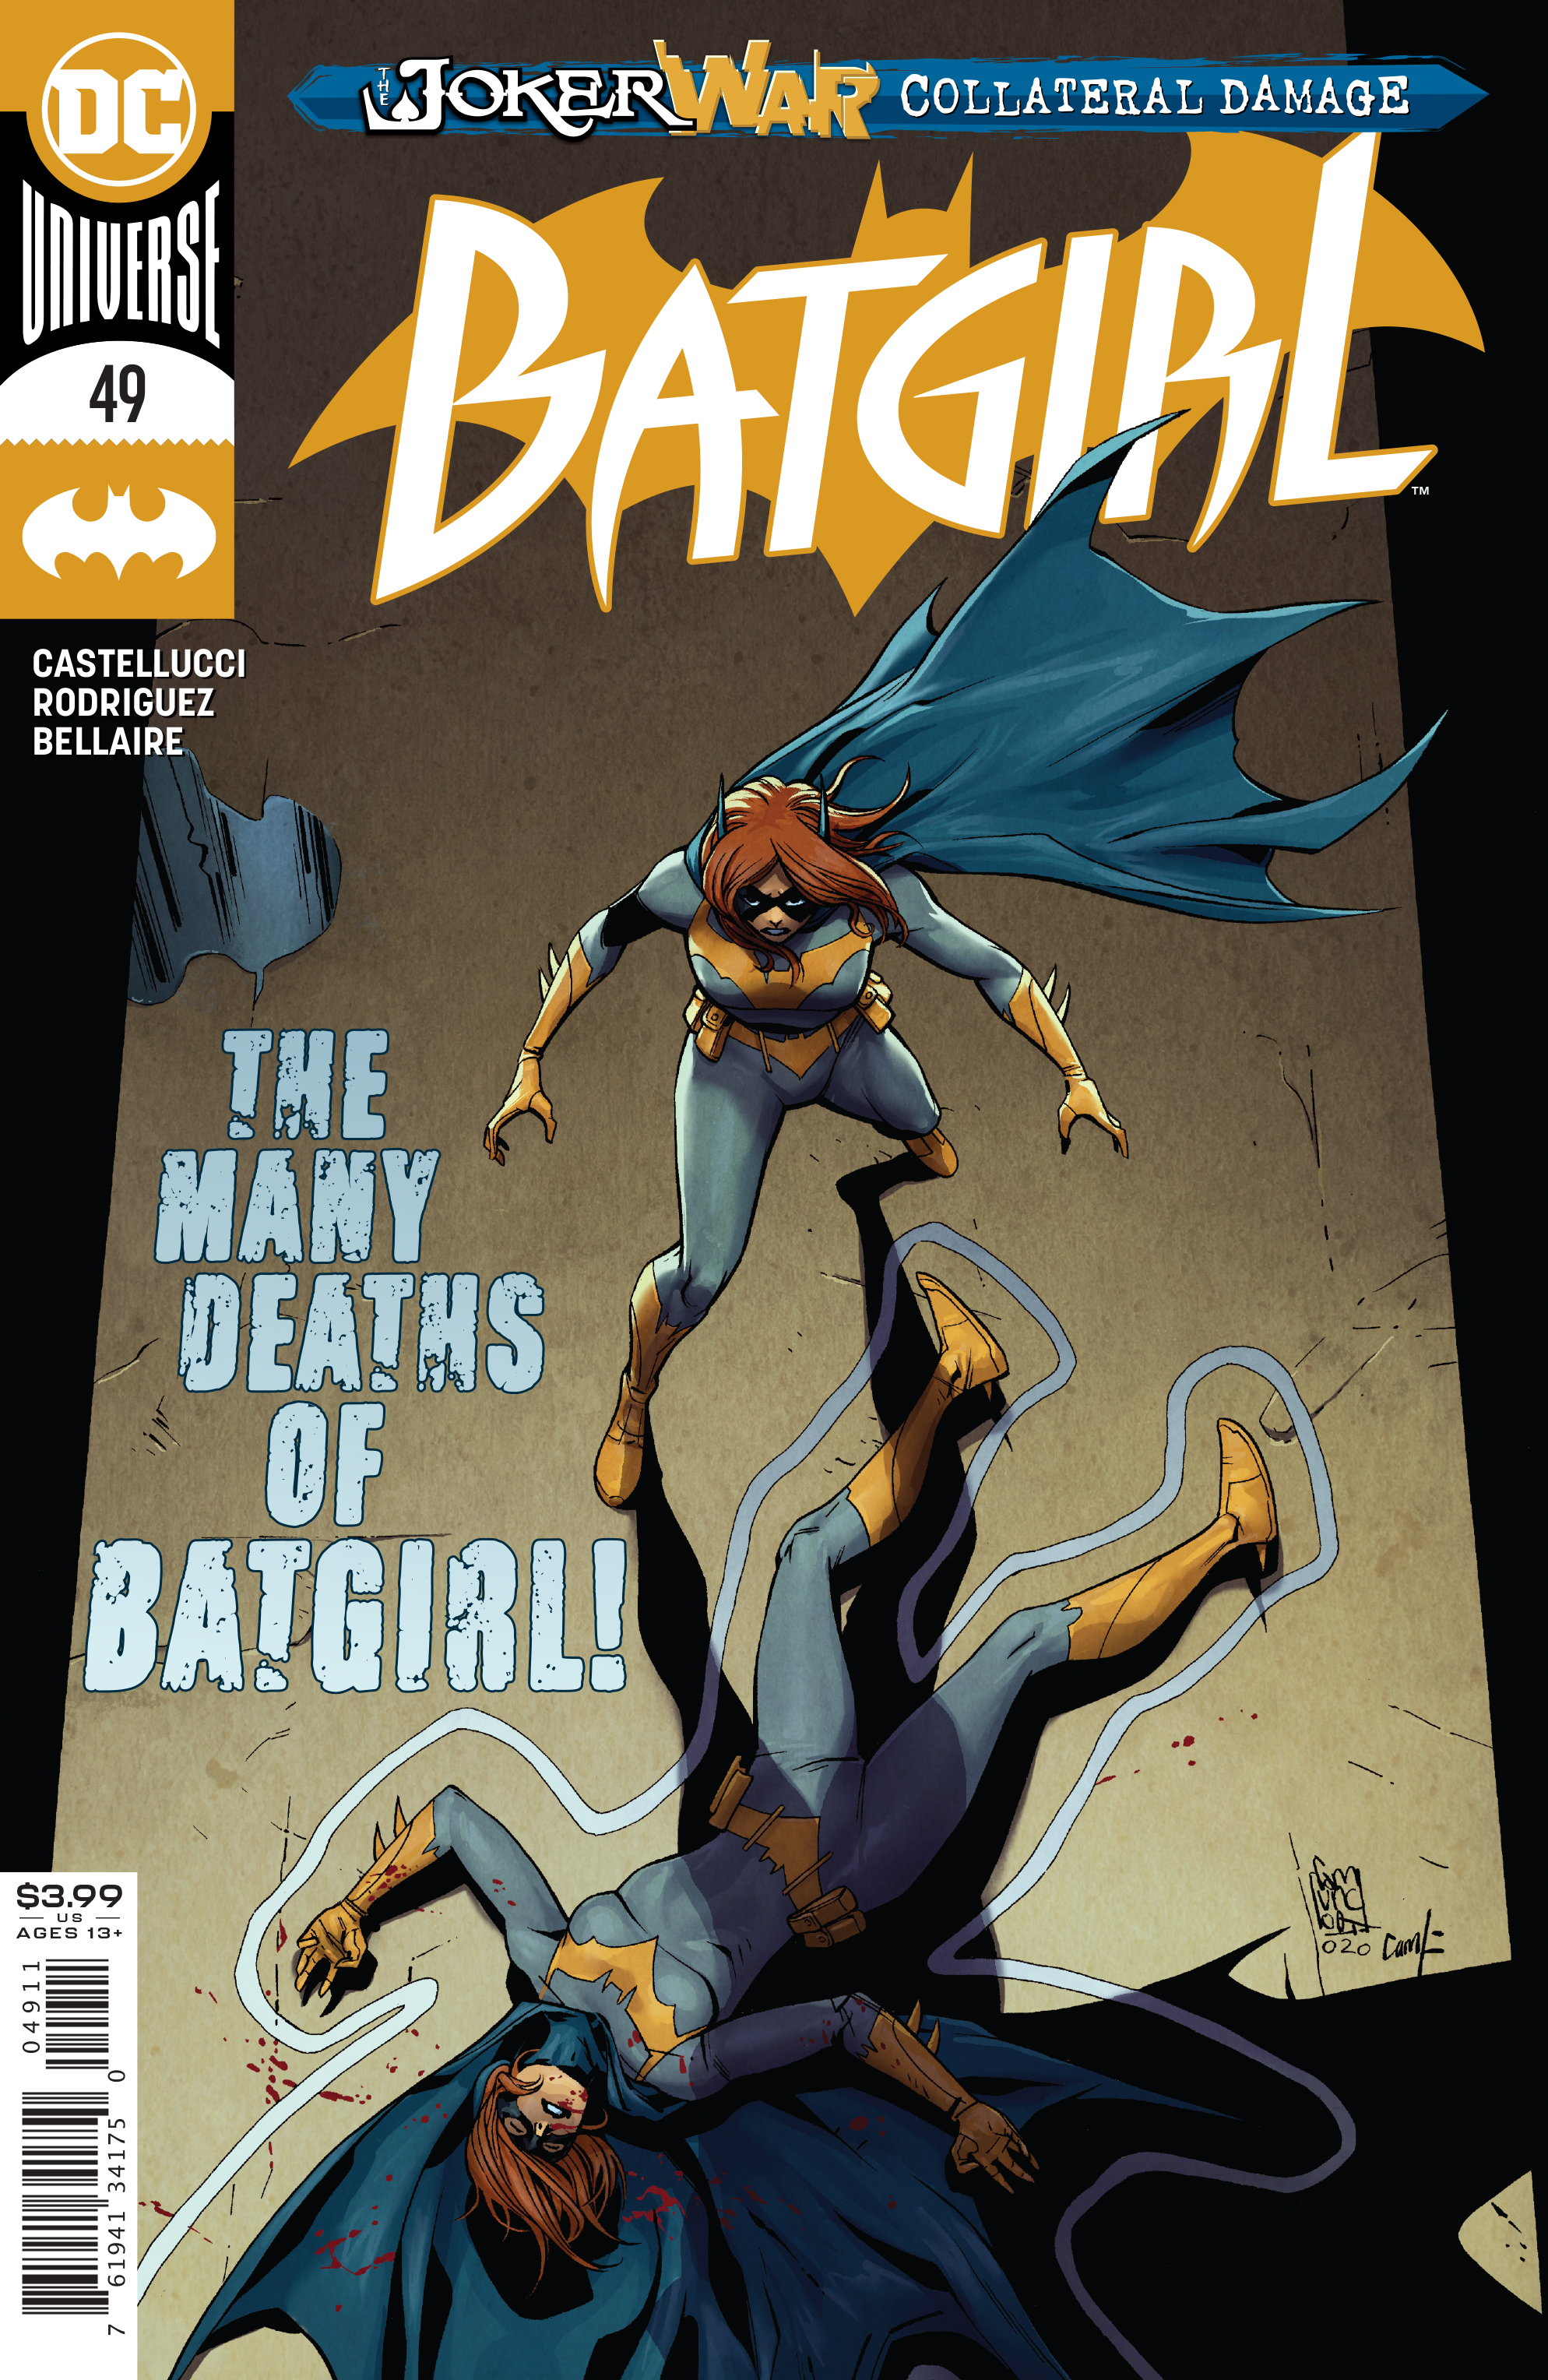 Batgirl #49 Cover A Giuseppe Camuncoli (Joker War) (2016)